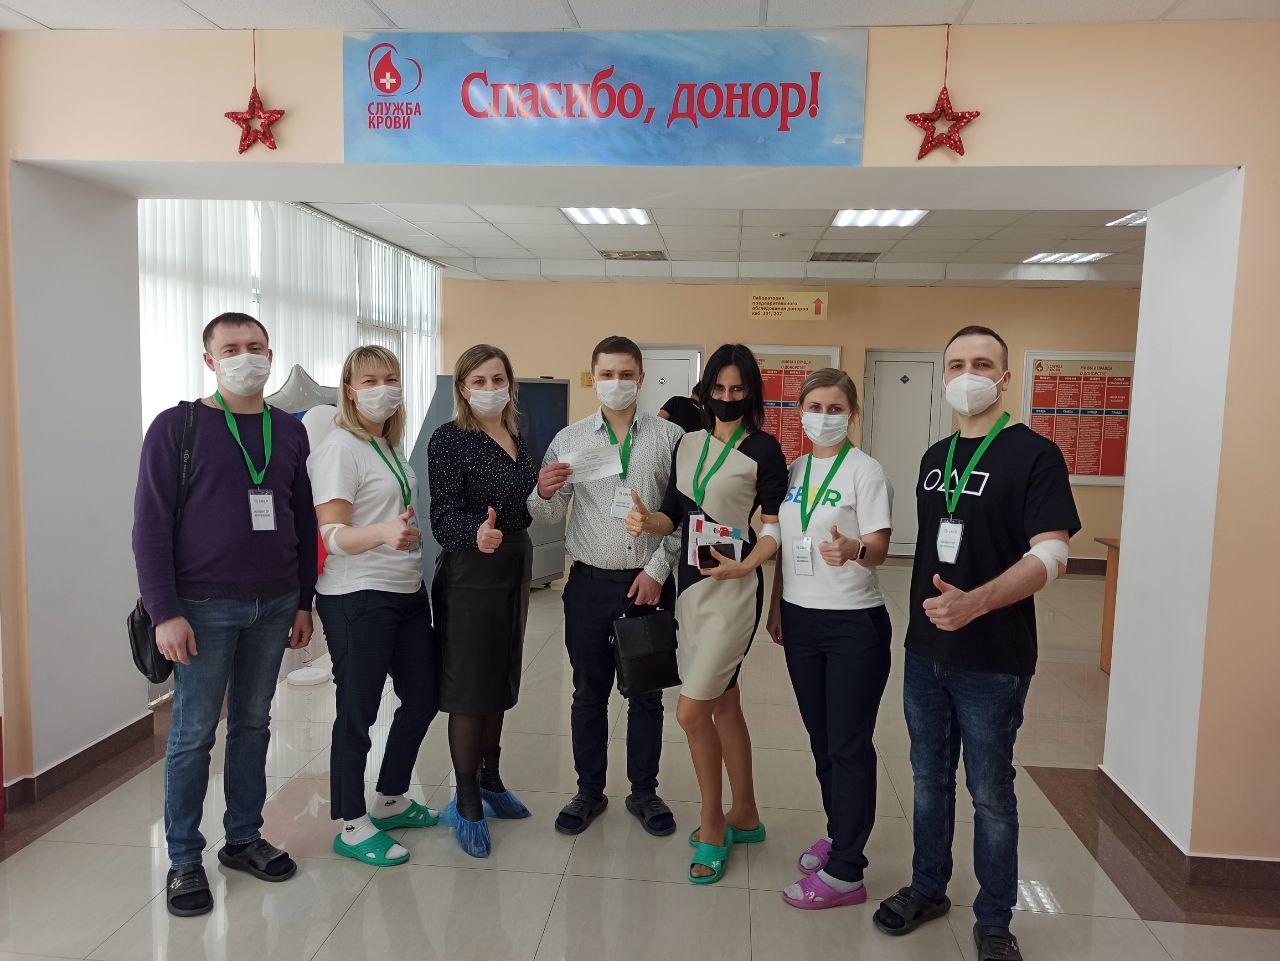 Сотрудники Сбербанка приняли участие в акции в поддержку донорства костного мозга